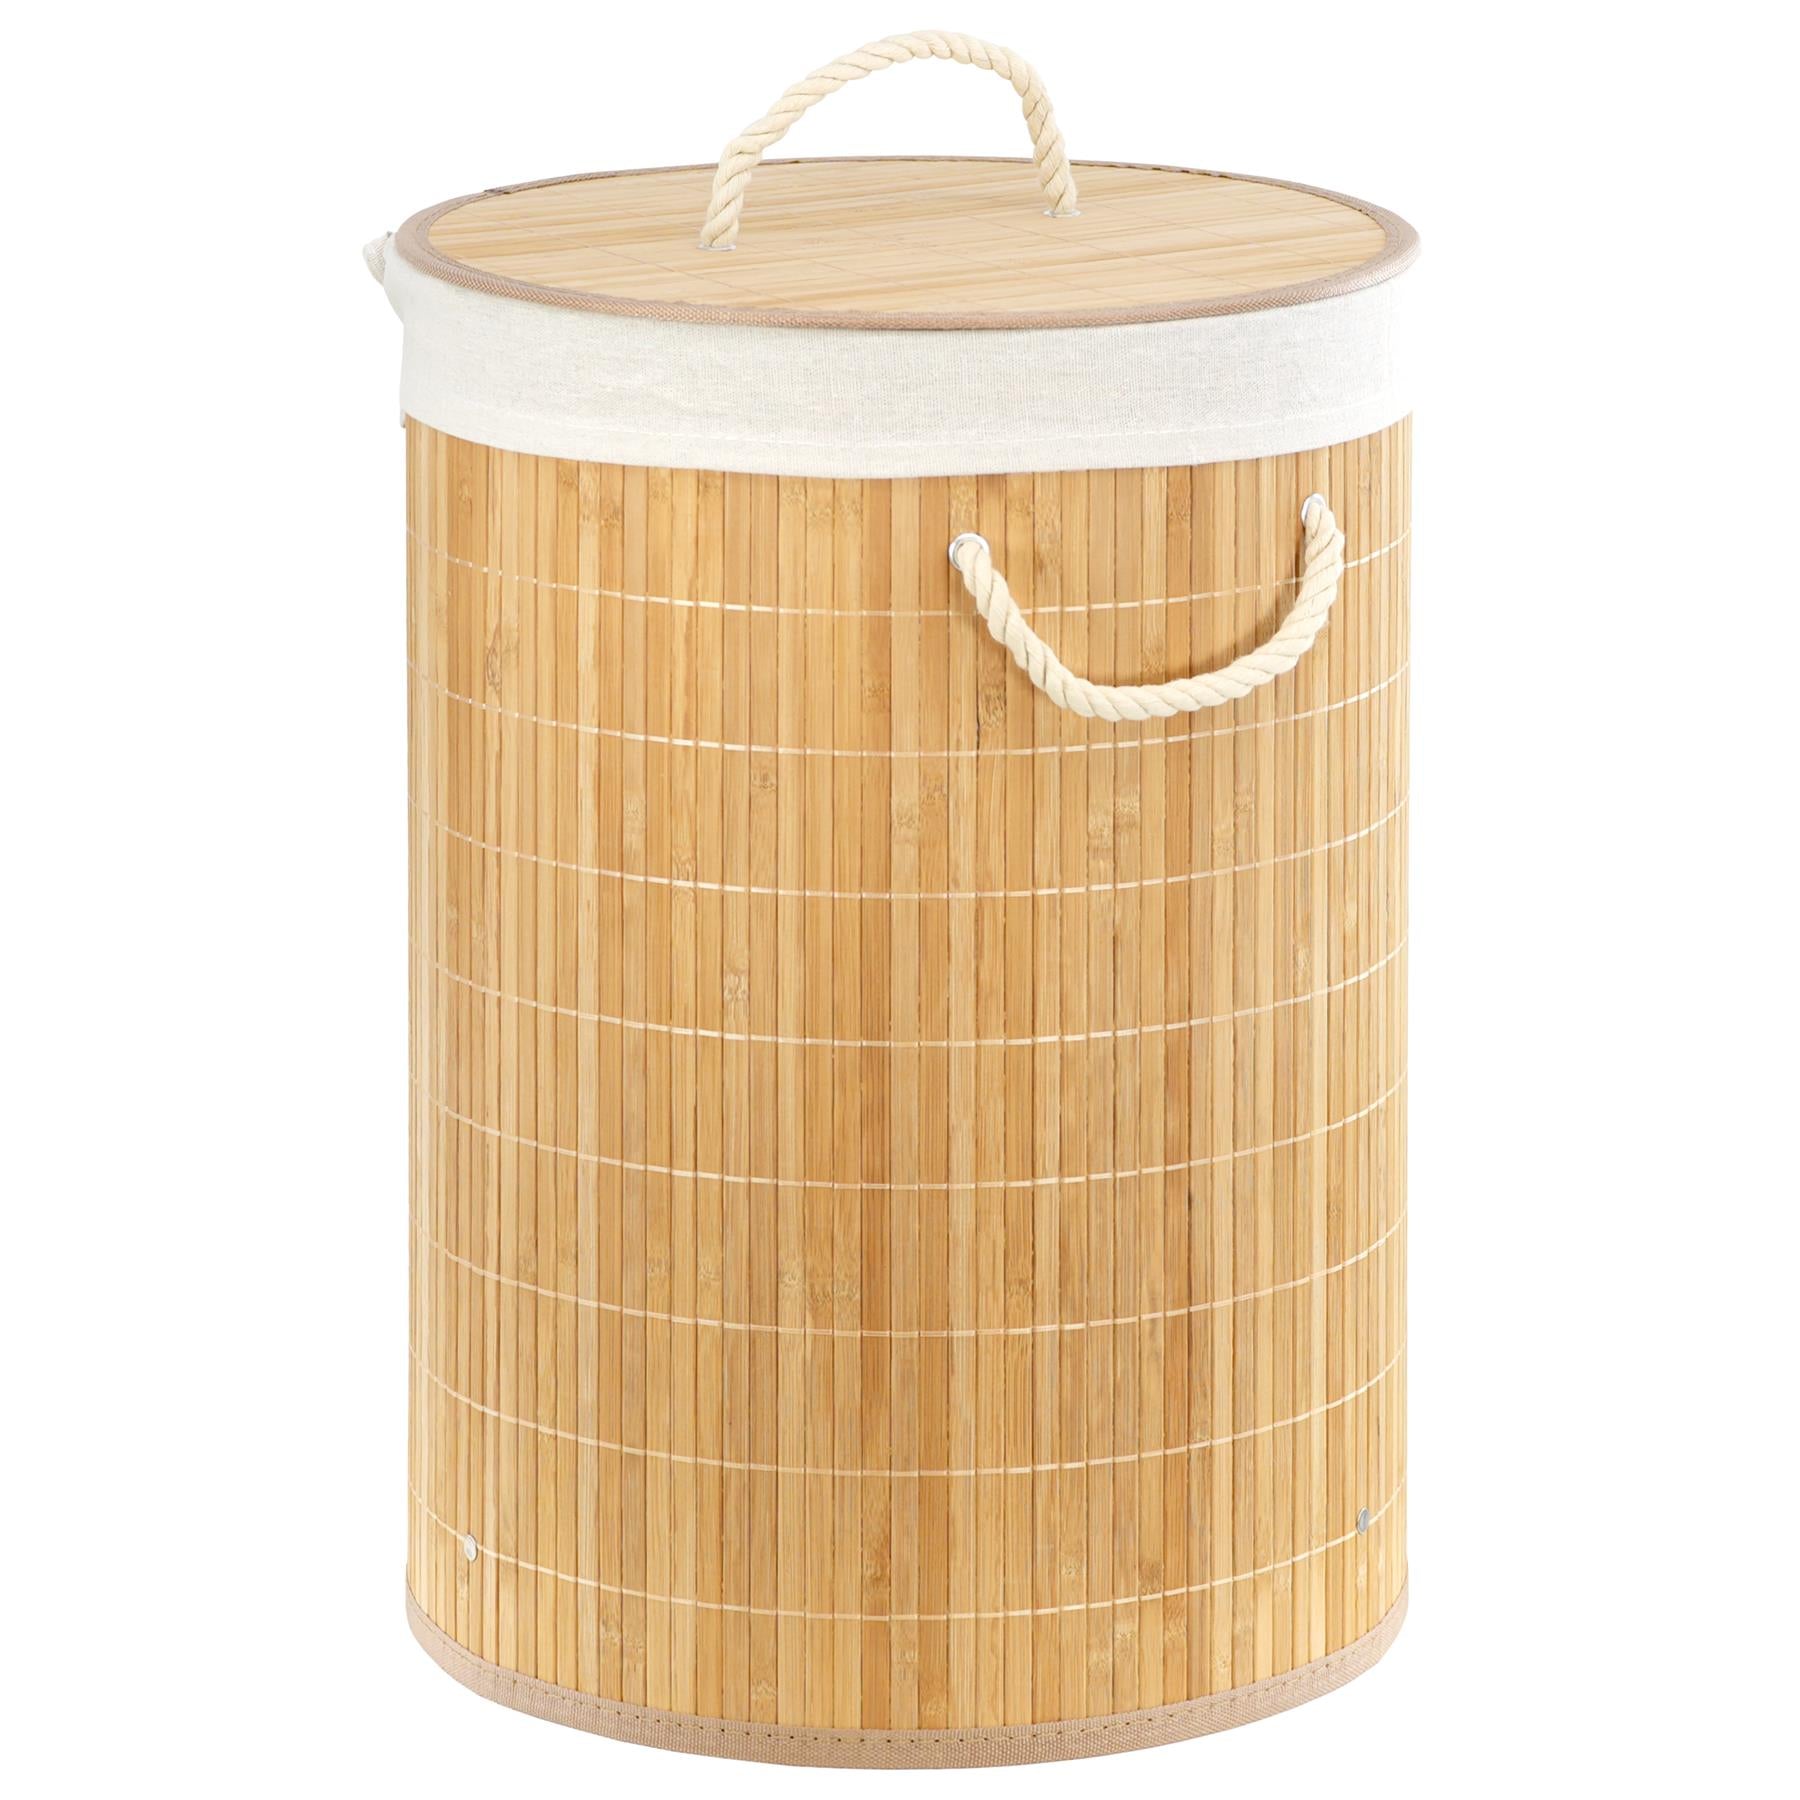 GEEZY Round Bamboo Basket Natural